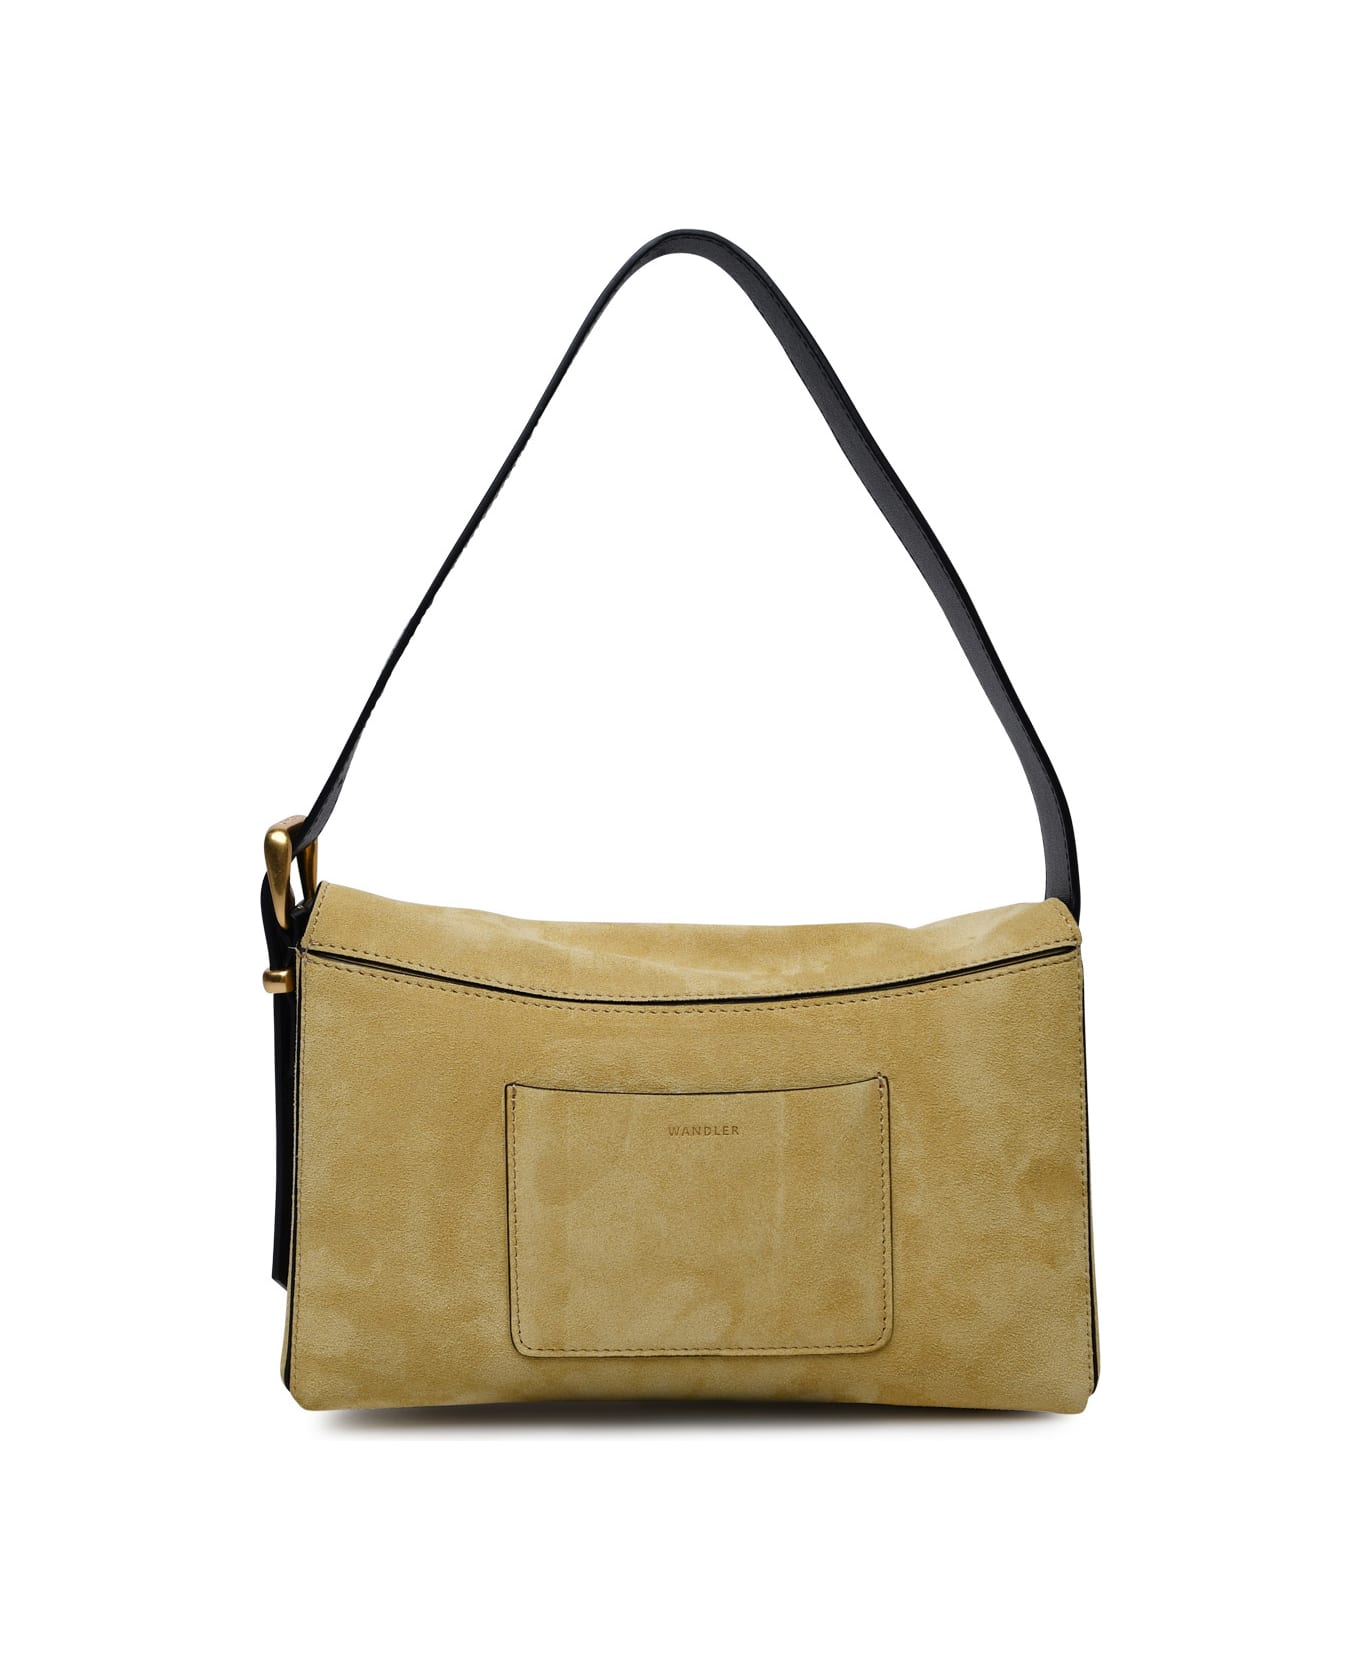 Wandler 'oscar Baguette' Sand Calf Leather Bag - Beige